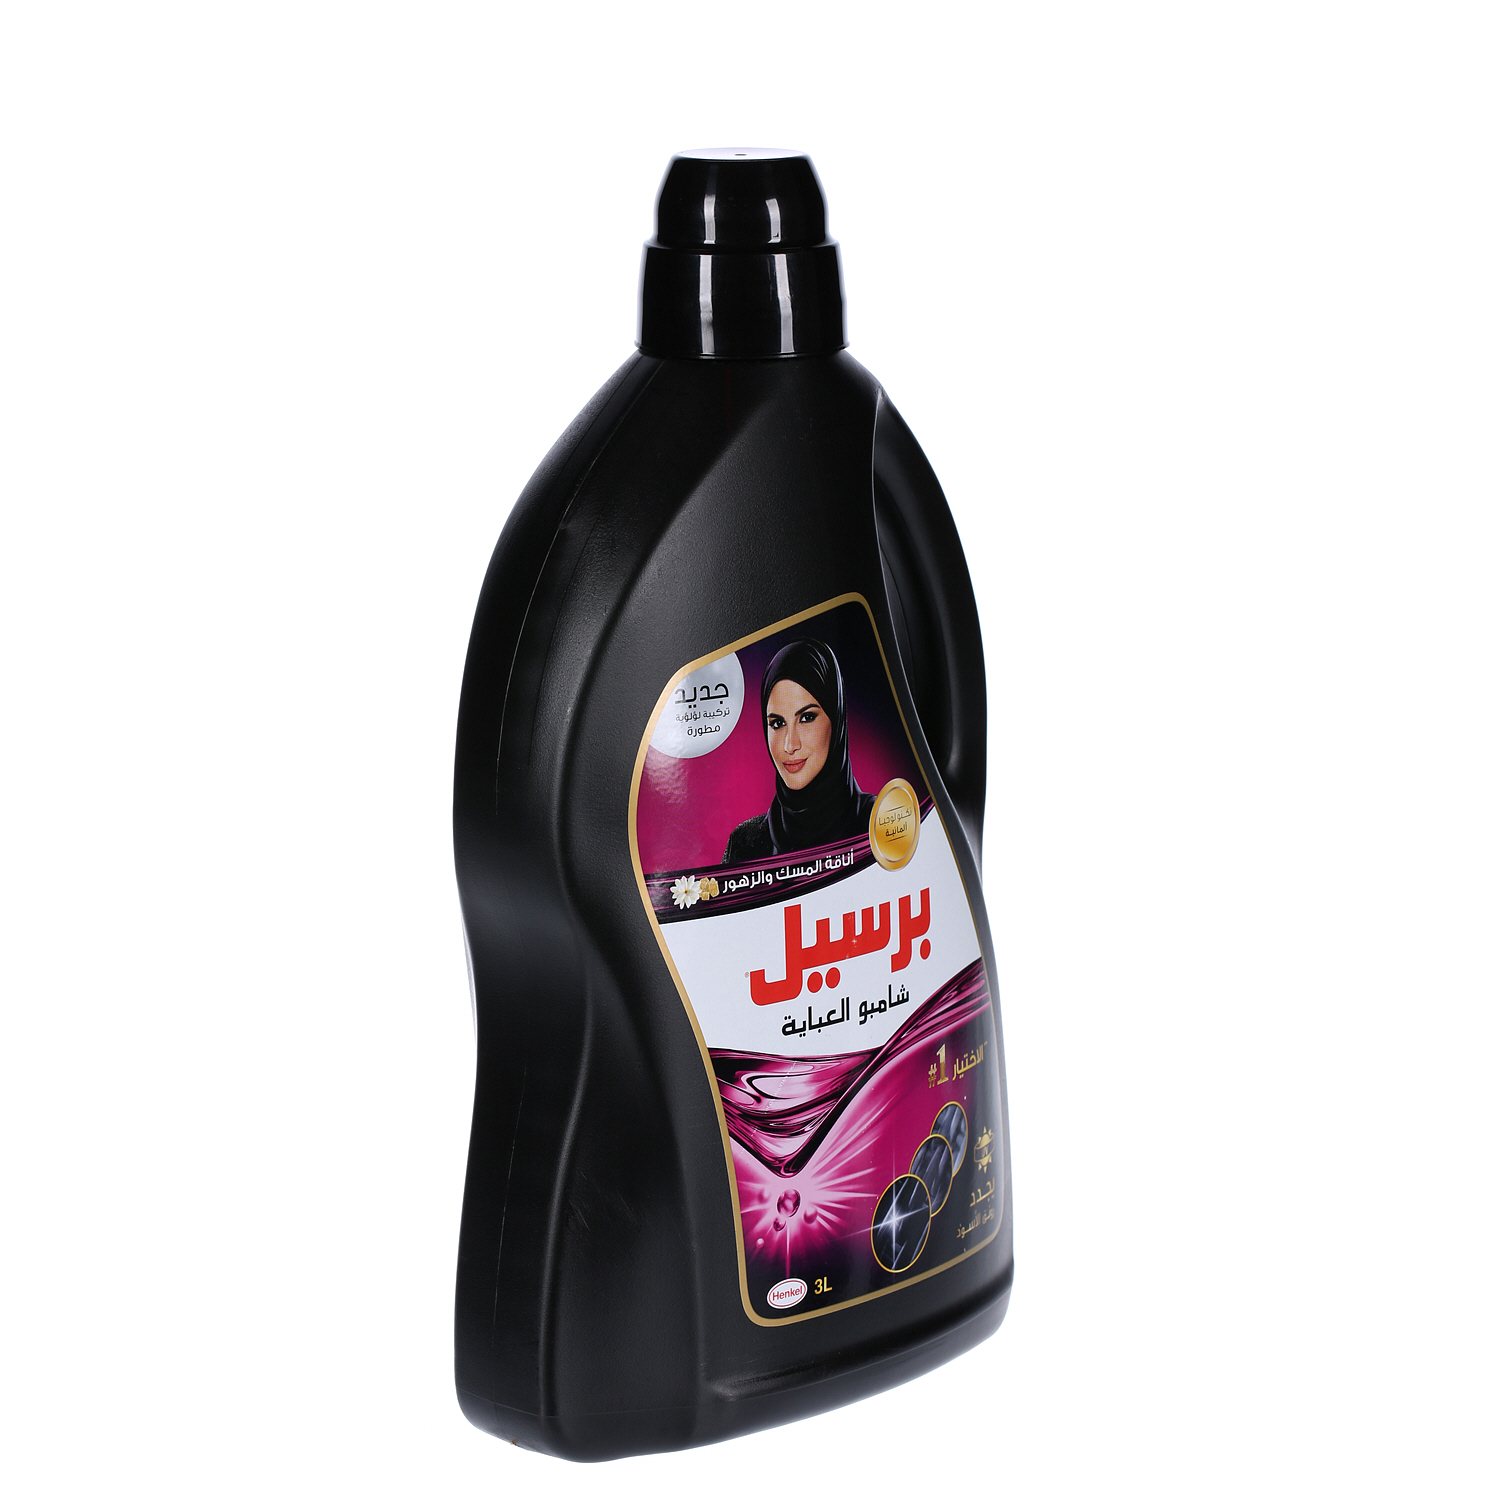 Persil Abaya Shampoo Liquid Detergent Anaqa Musk And Flower 3 L